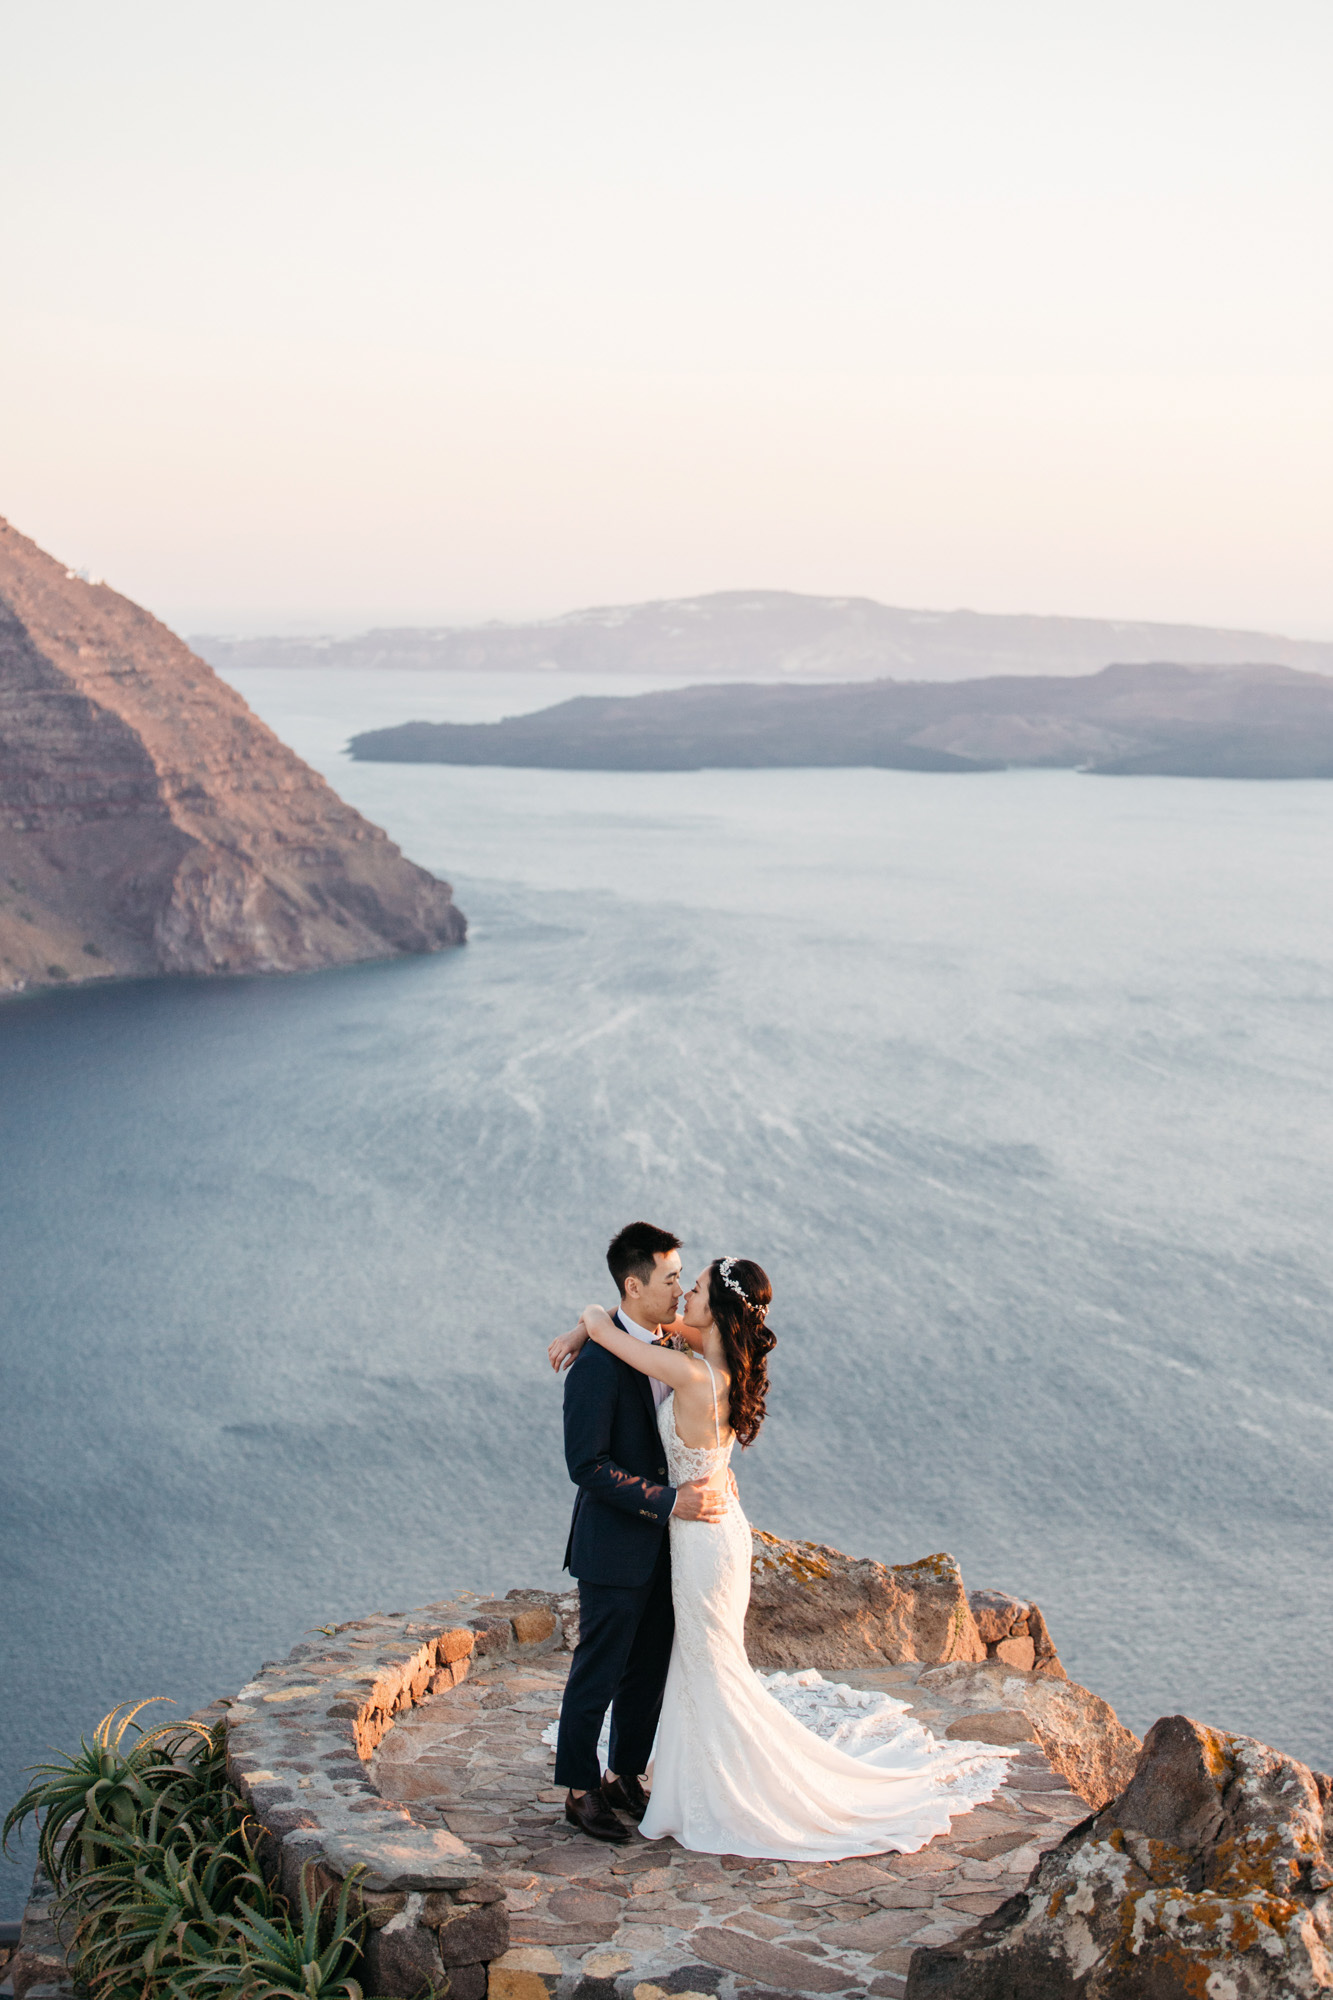 Intimate destination wedding in Aenaon Villas in Oia Santorini Greece.